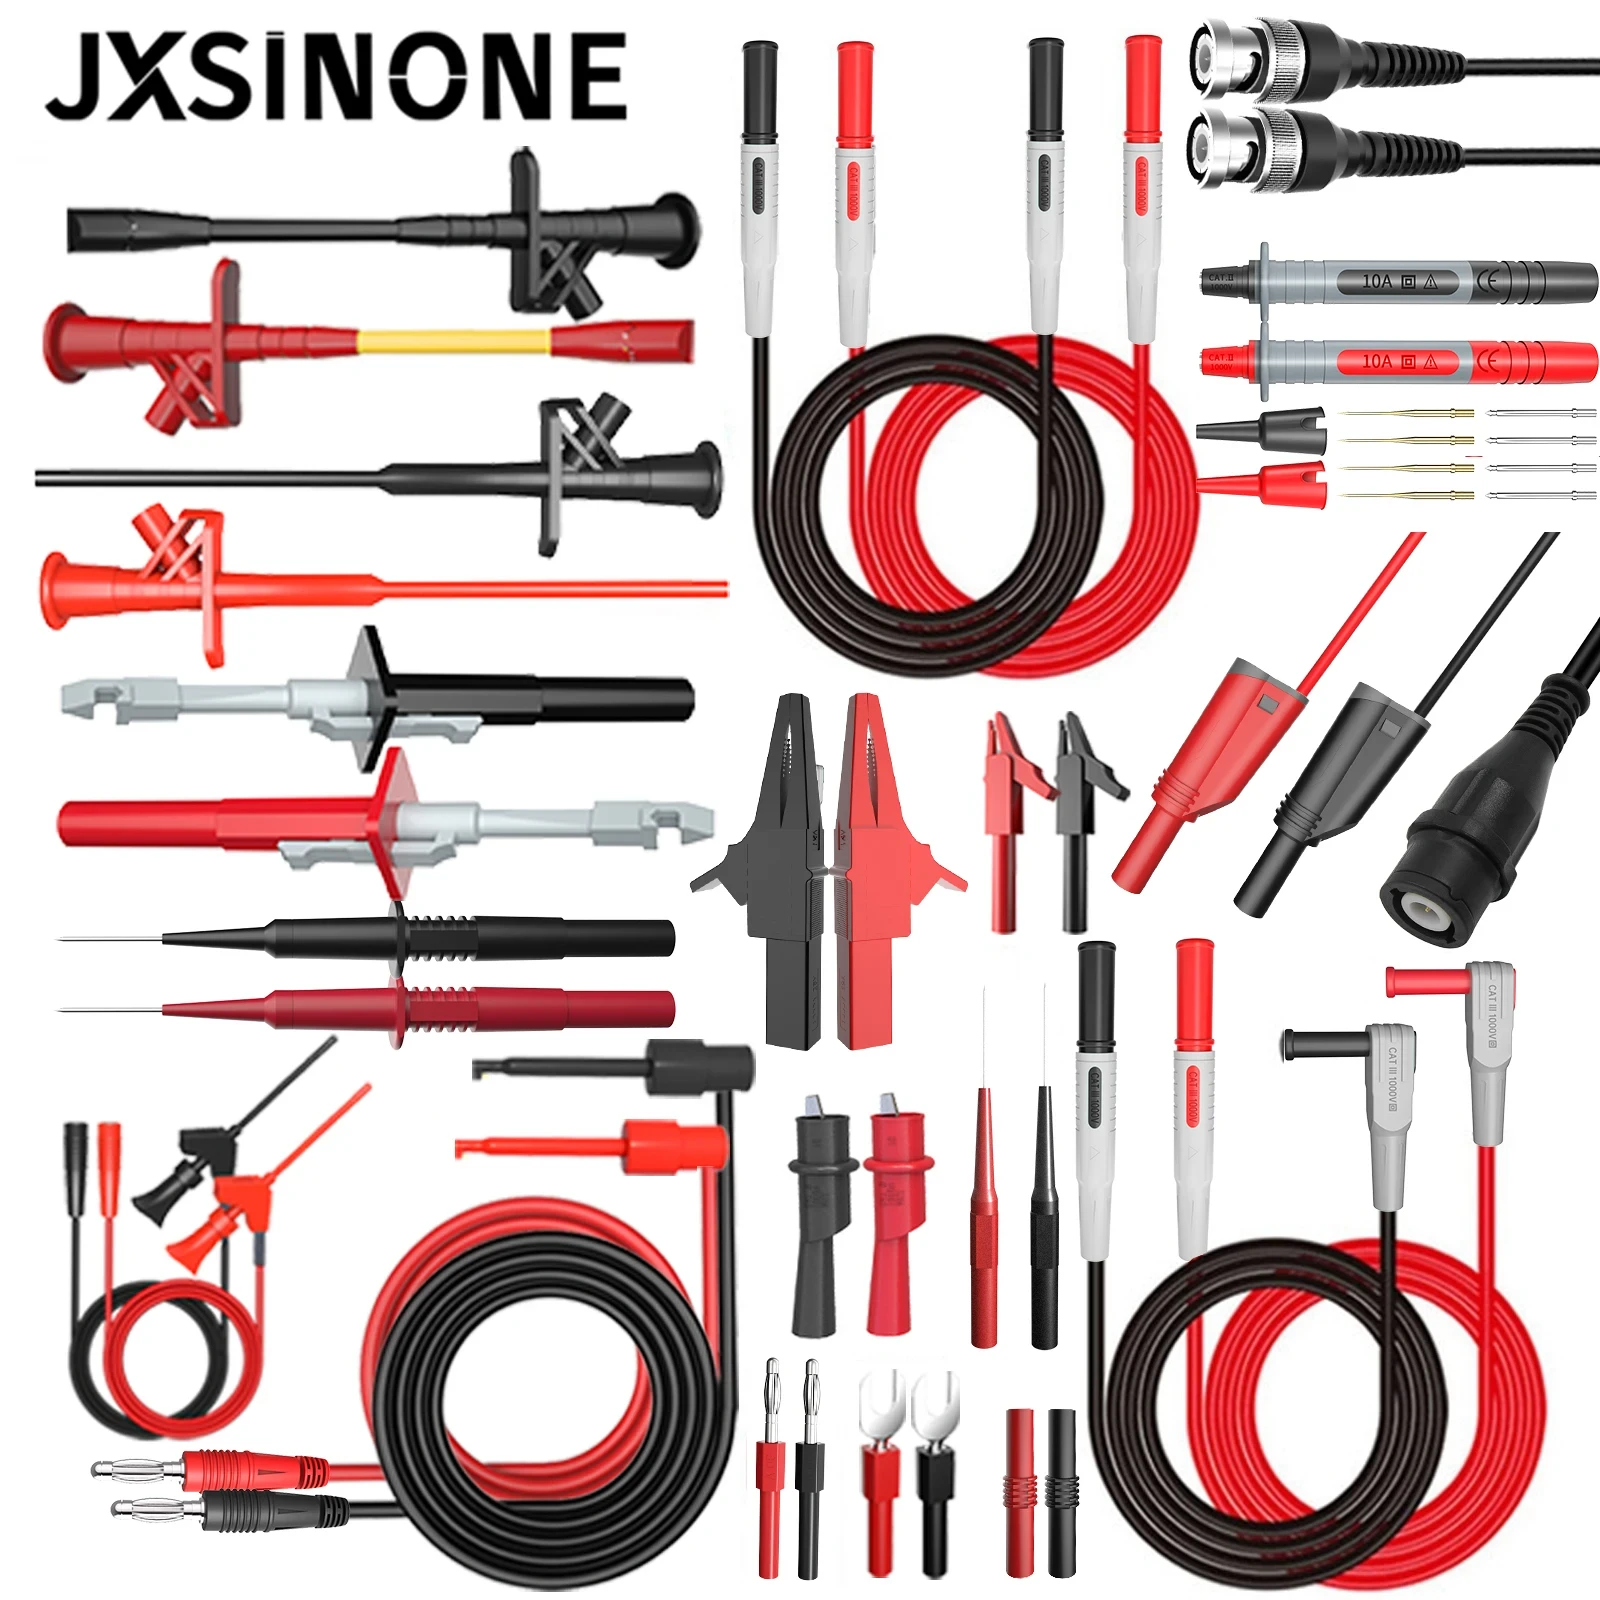 JXSINONE P1600 series Multimeter Test Lead Kit 4mm Banana Plug-Test Cable Test Probe IC Hook Clips Automotive Repair Tool Set